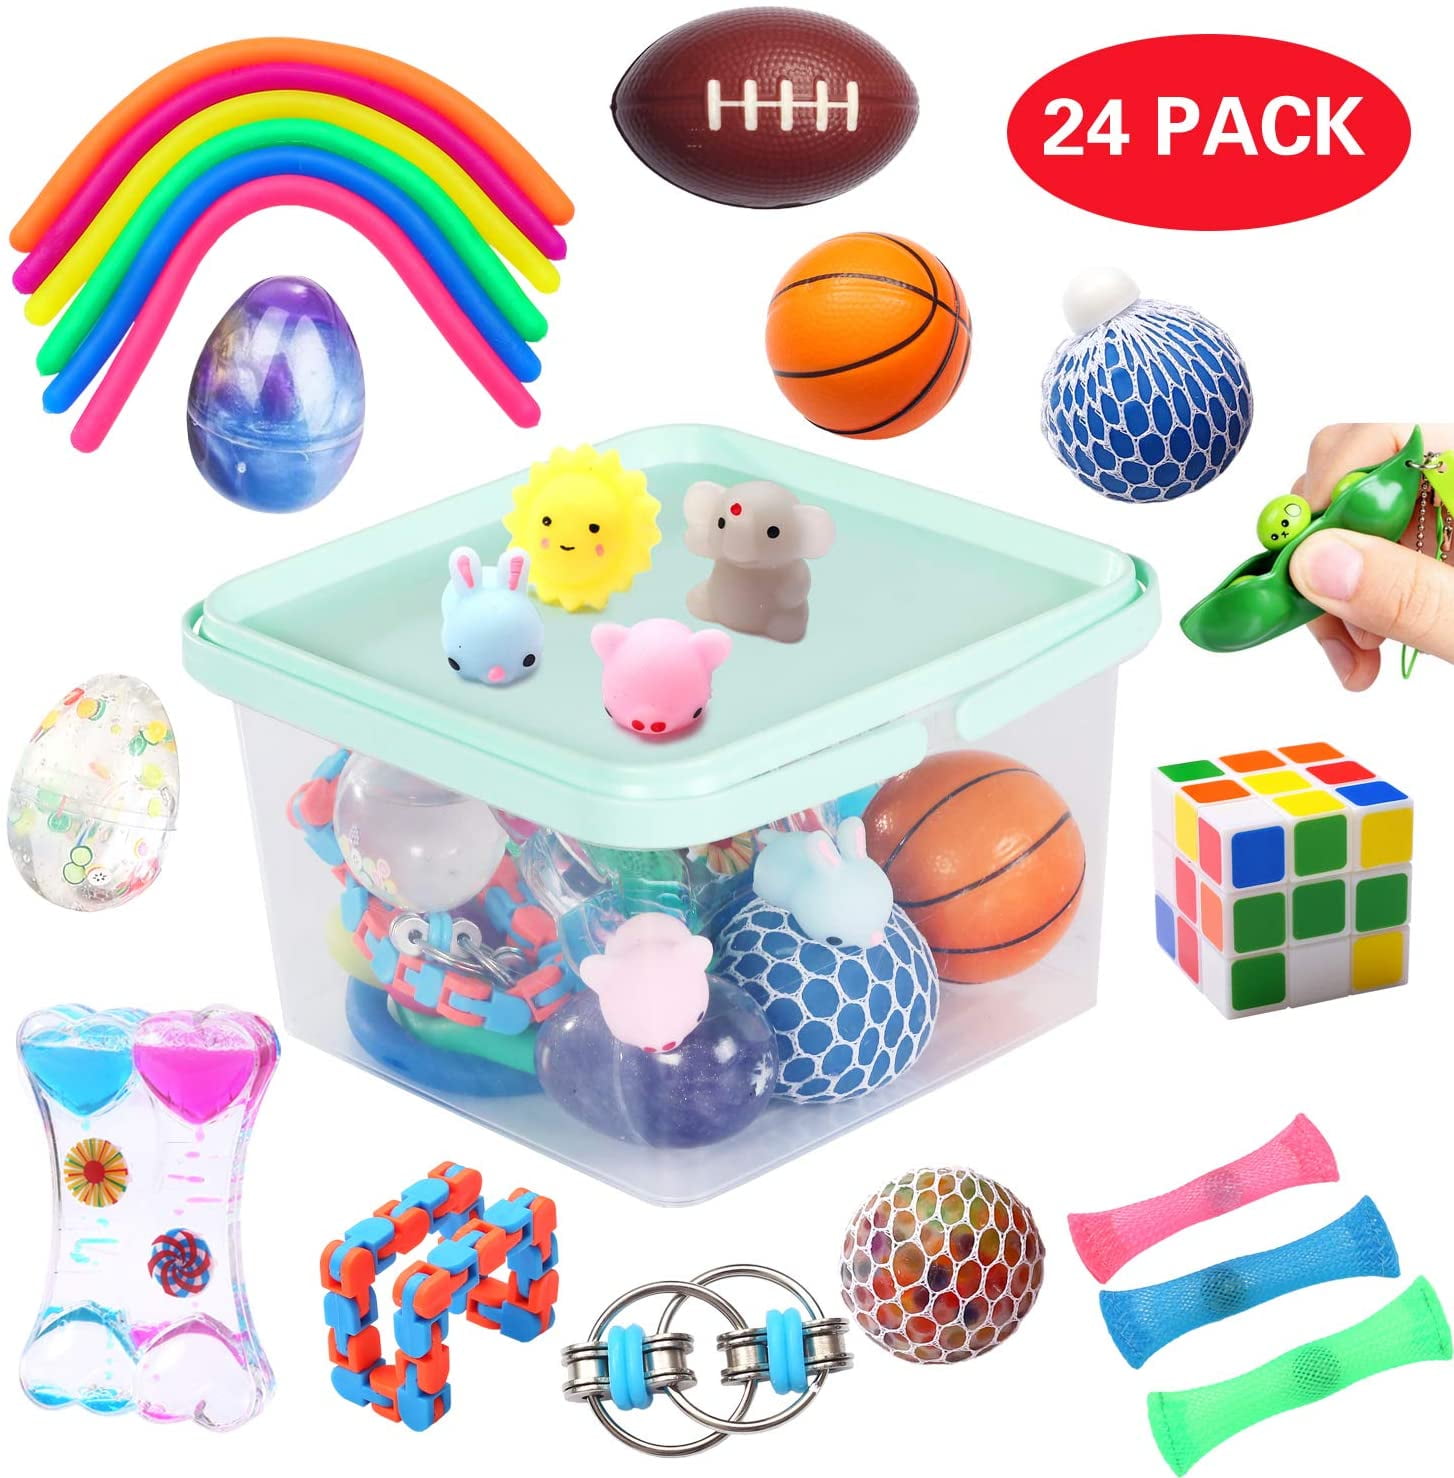 Details about   24Pack Fidget Toys Set Sensory Tools Bundle Stress Relief Hand Kids Adults Toy 